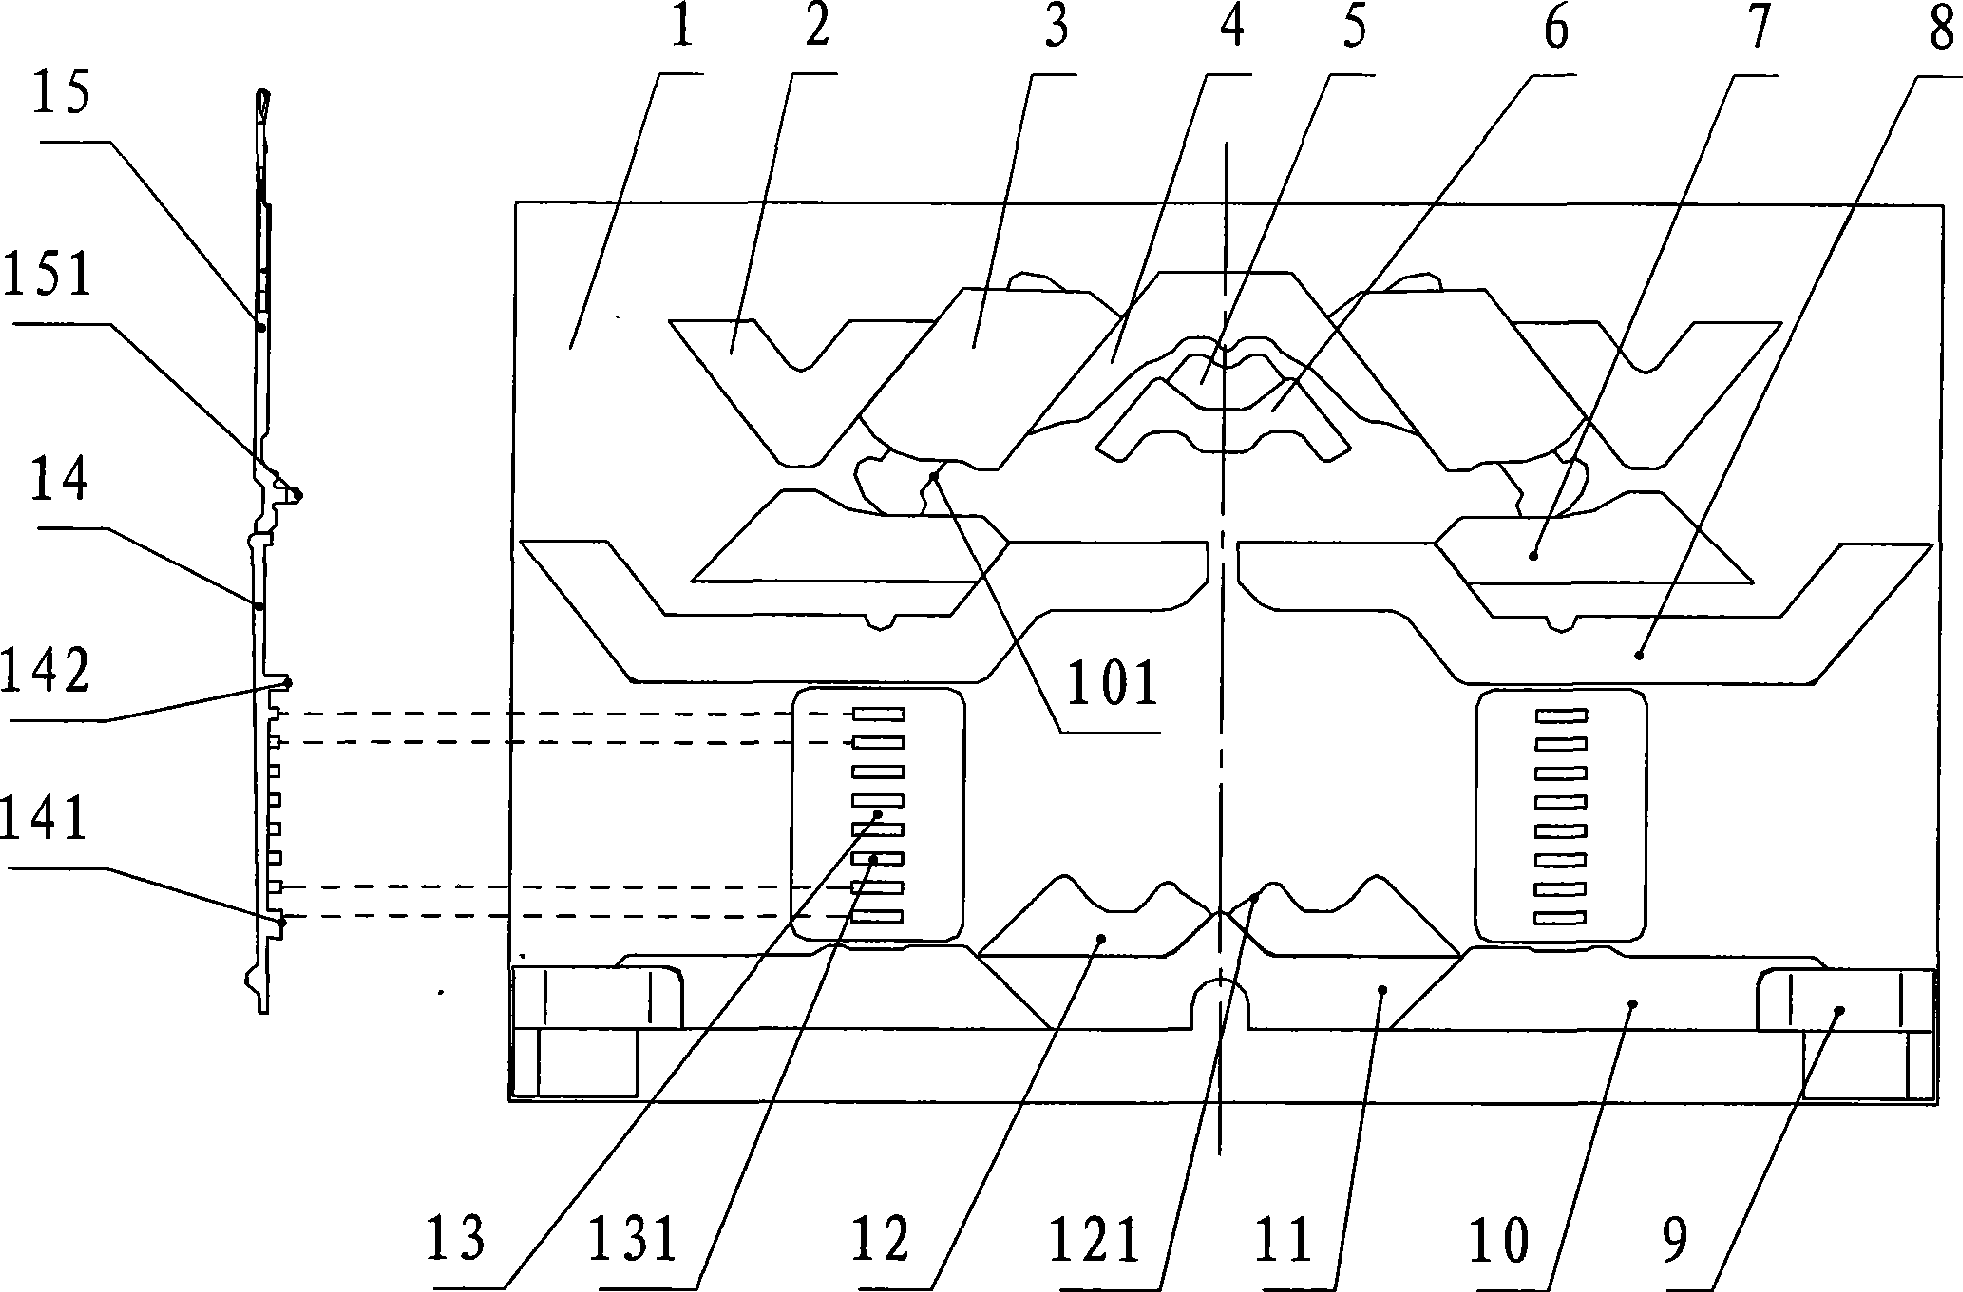 Novel computerized flat knitting mechanism